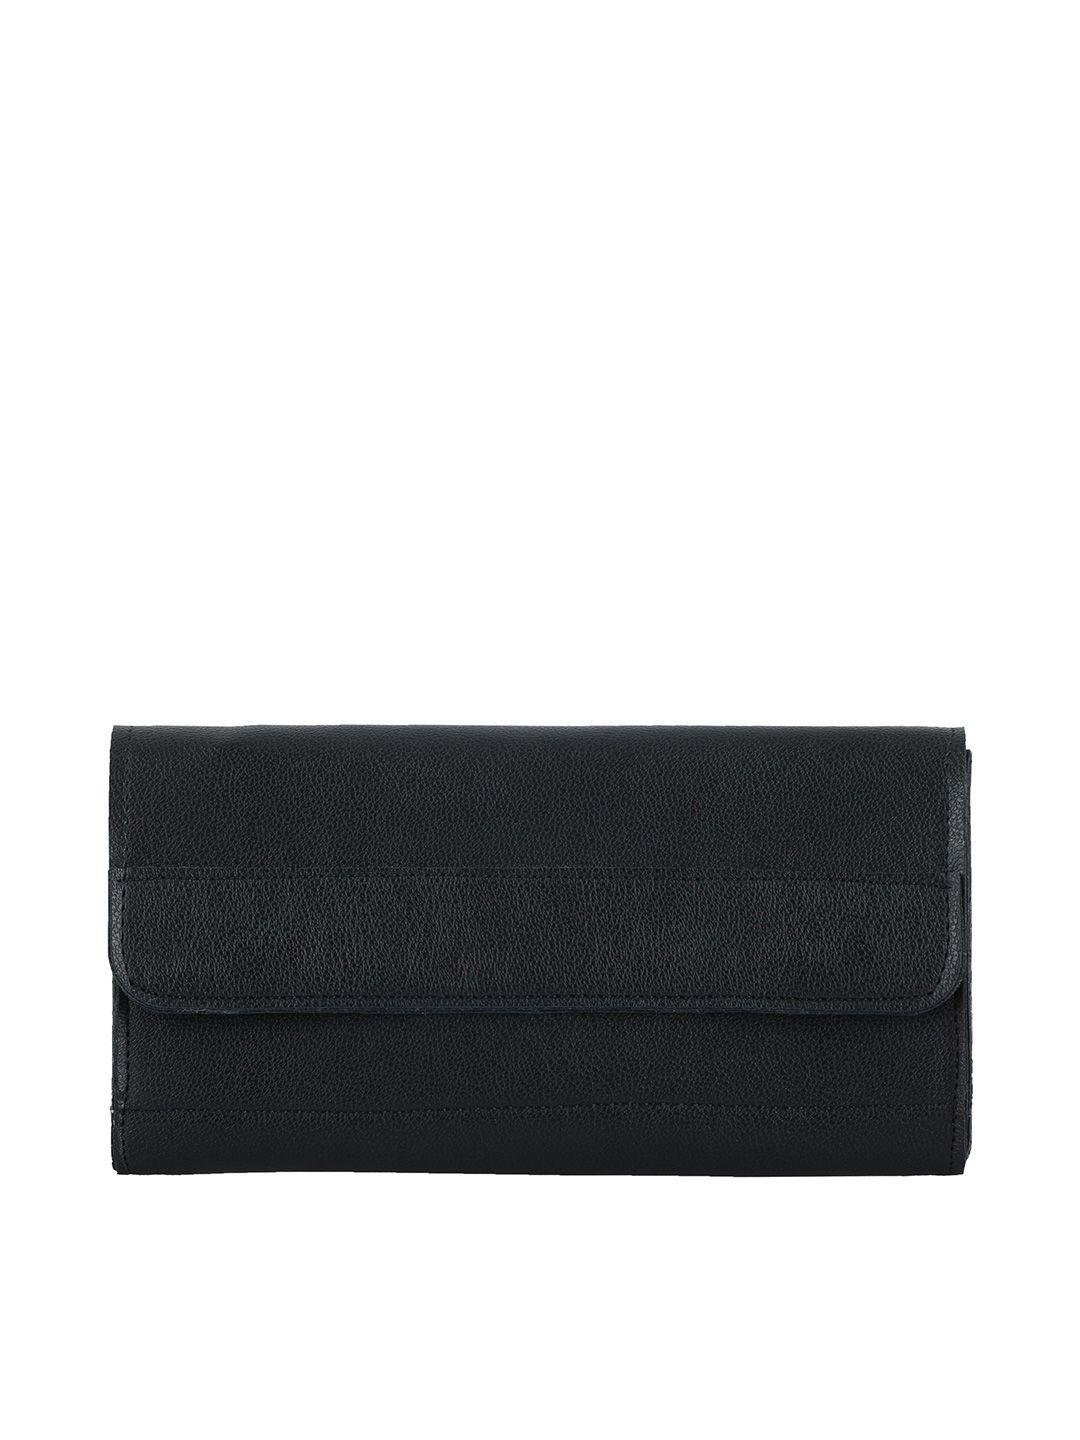 toteteca women black two fold wallet